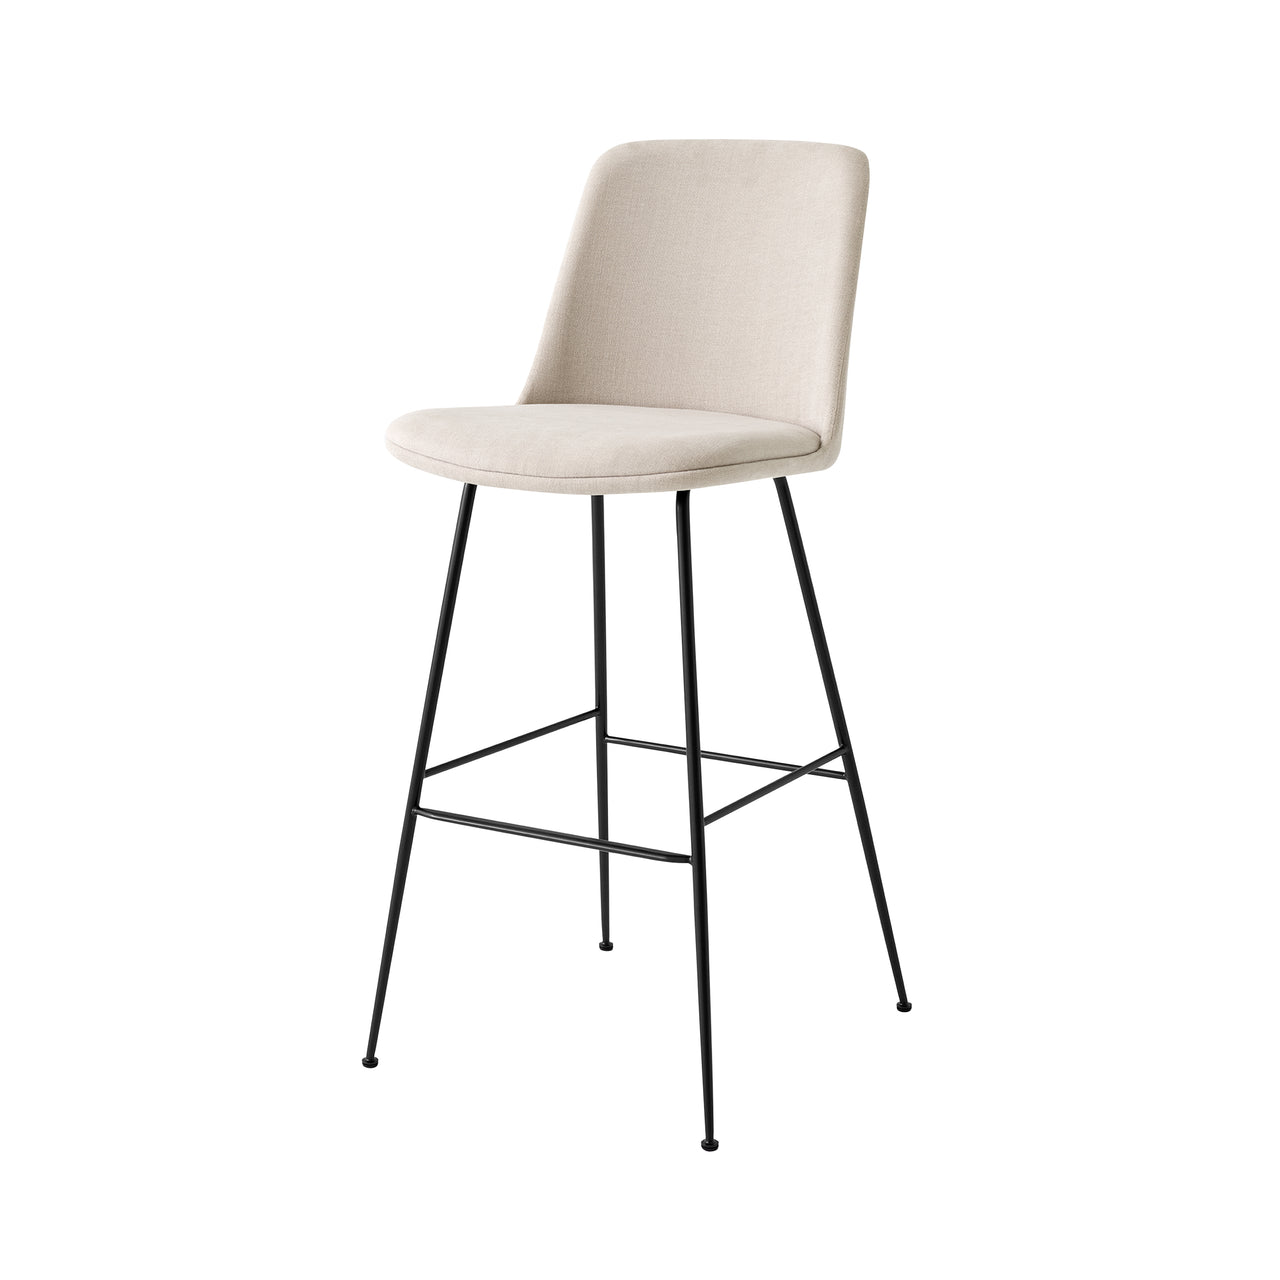 Rely Bar + Counter Highback Chair: HW94 + HW99 + Bar (HW99) + Black